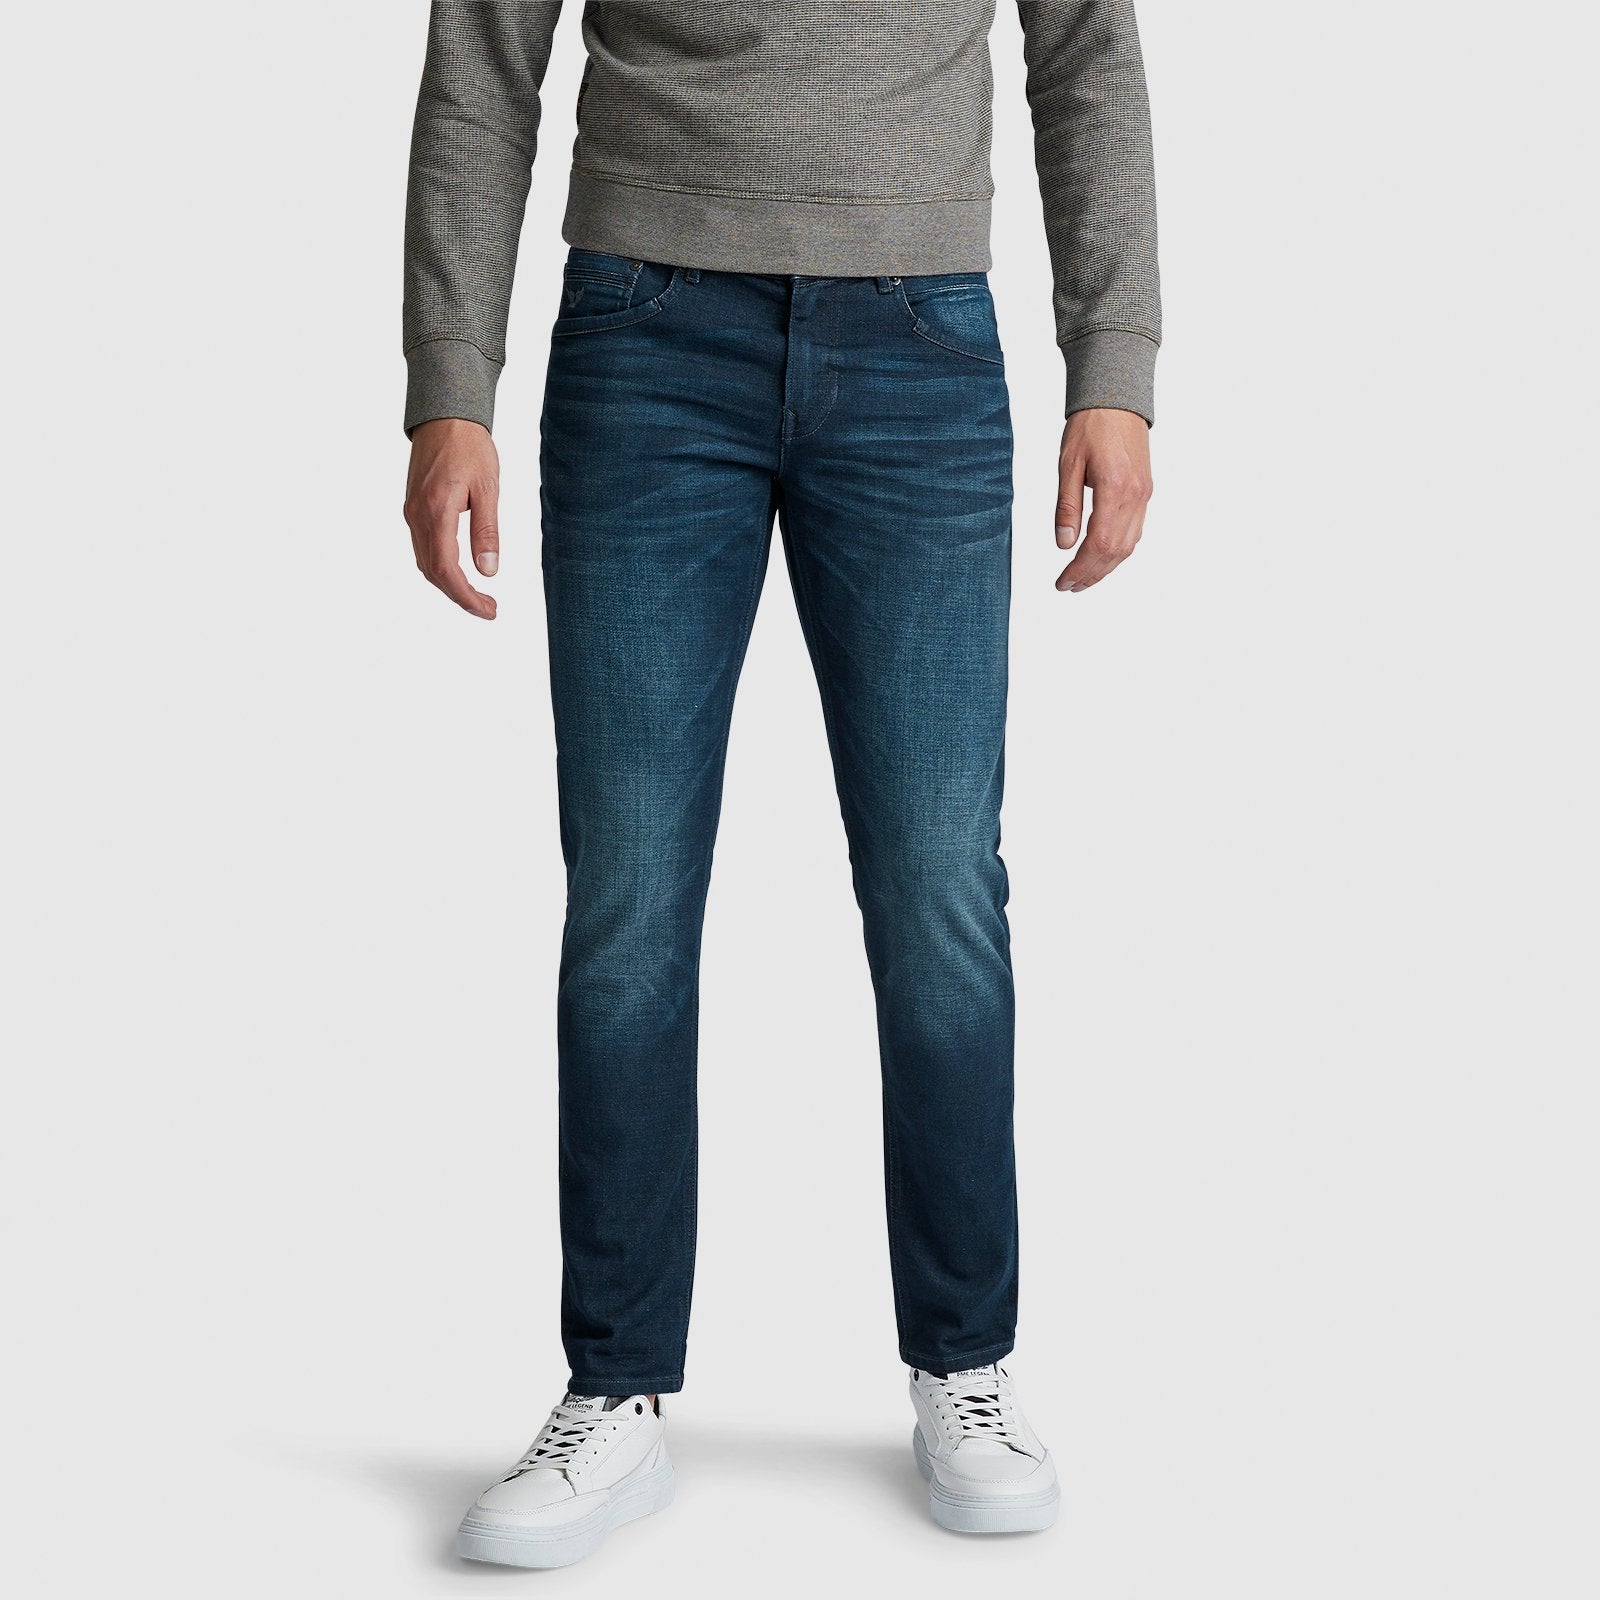 PME | TAILWHEEL Jeans- Slim Fit | DDS Dark Denim